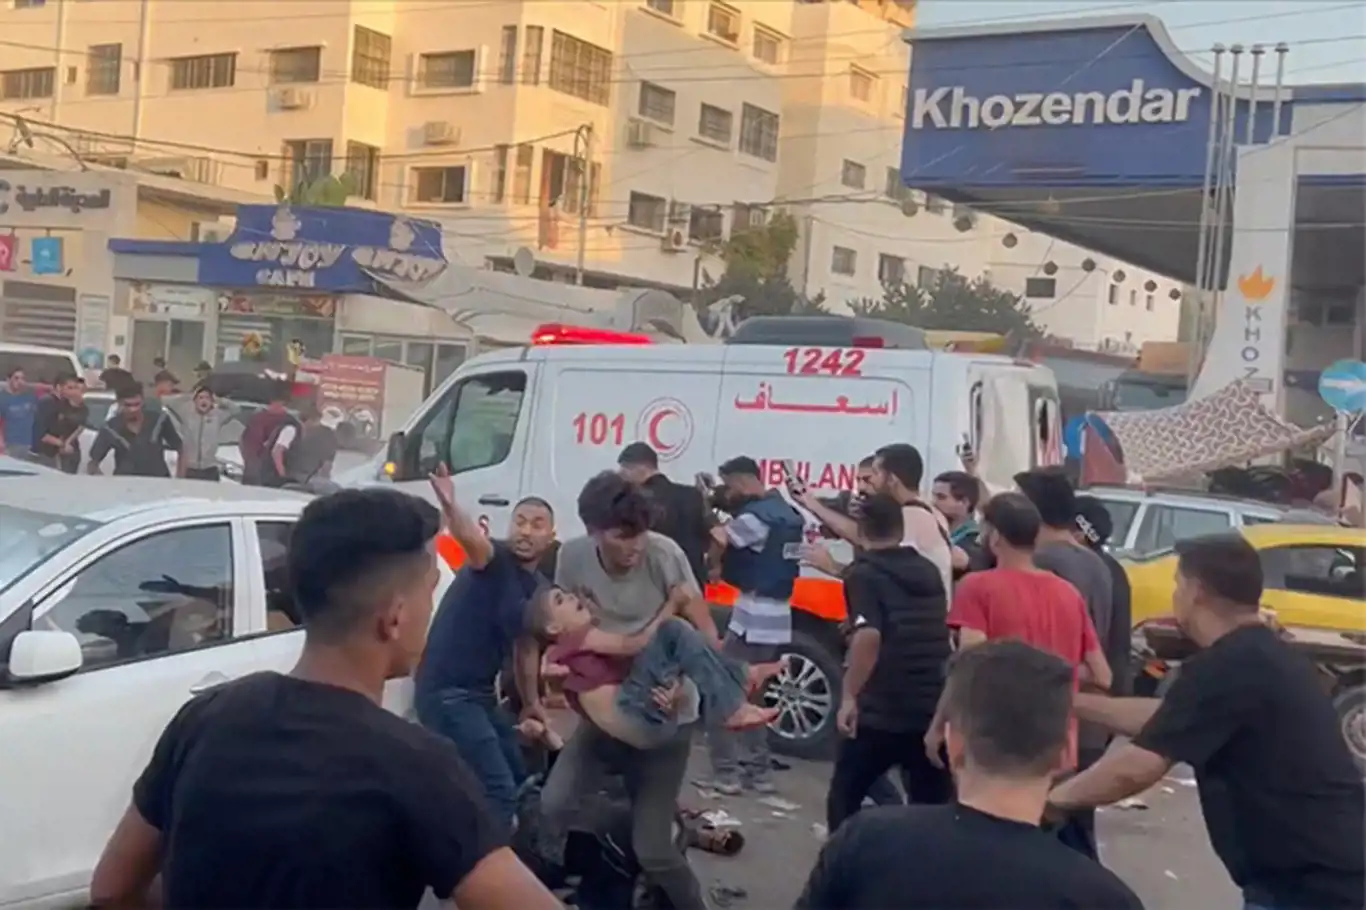 Siyonist rejimin vurduğu ambulansı "HAMAS'ın kullandığı" iddiasına yalanlama